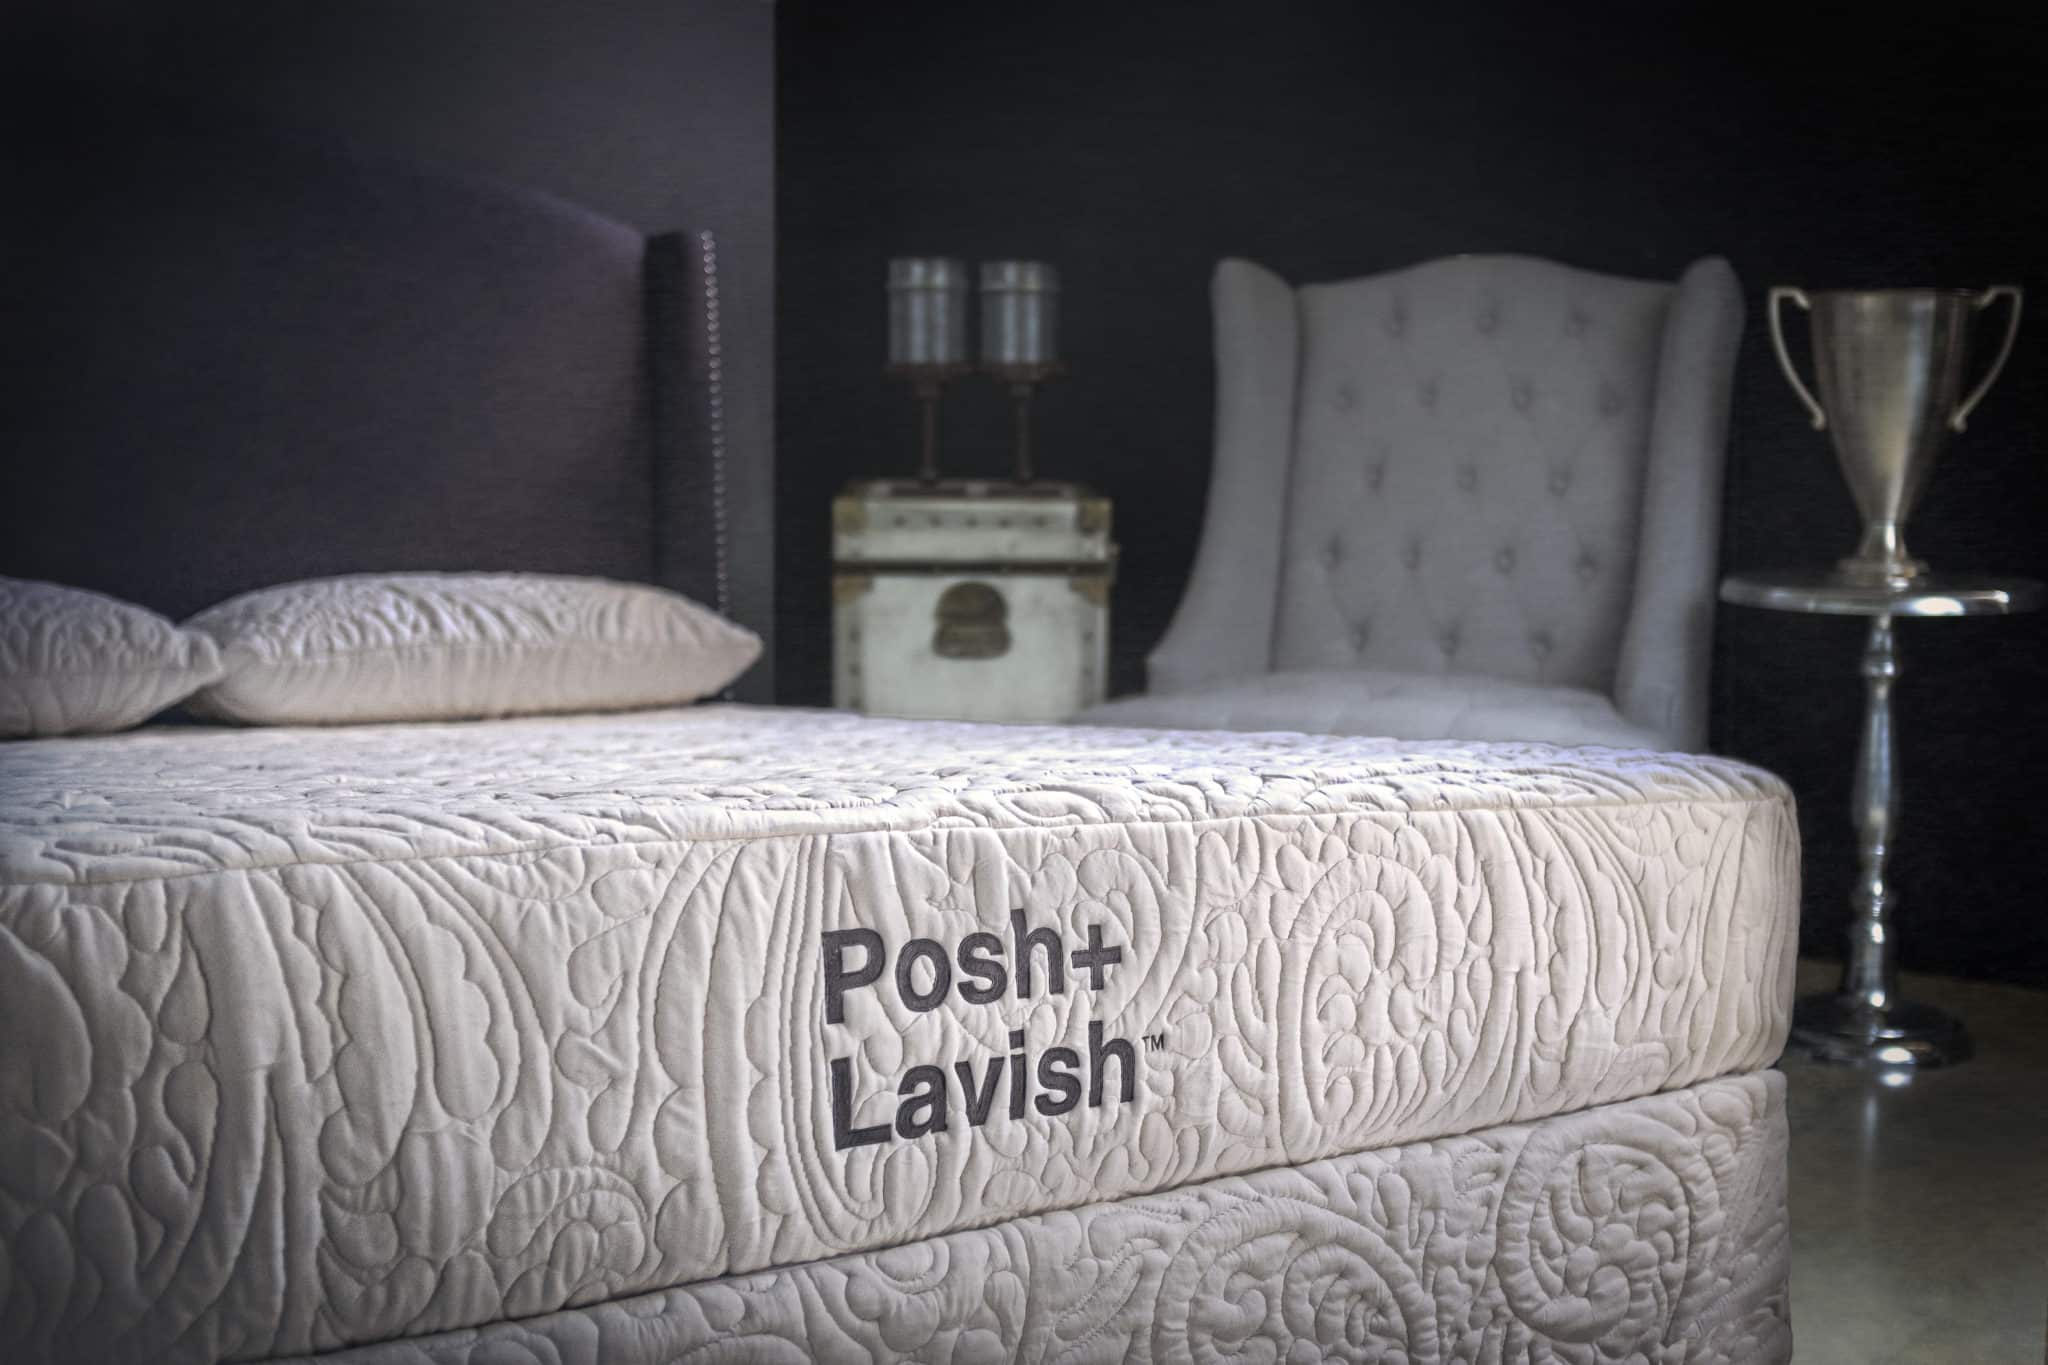 posh and lavish relax mattress reviews